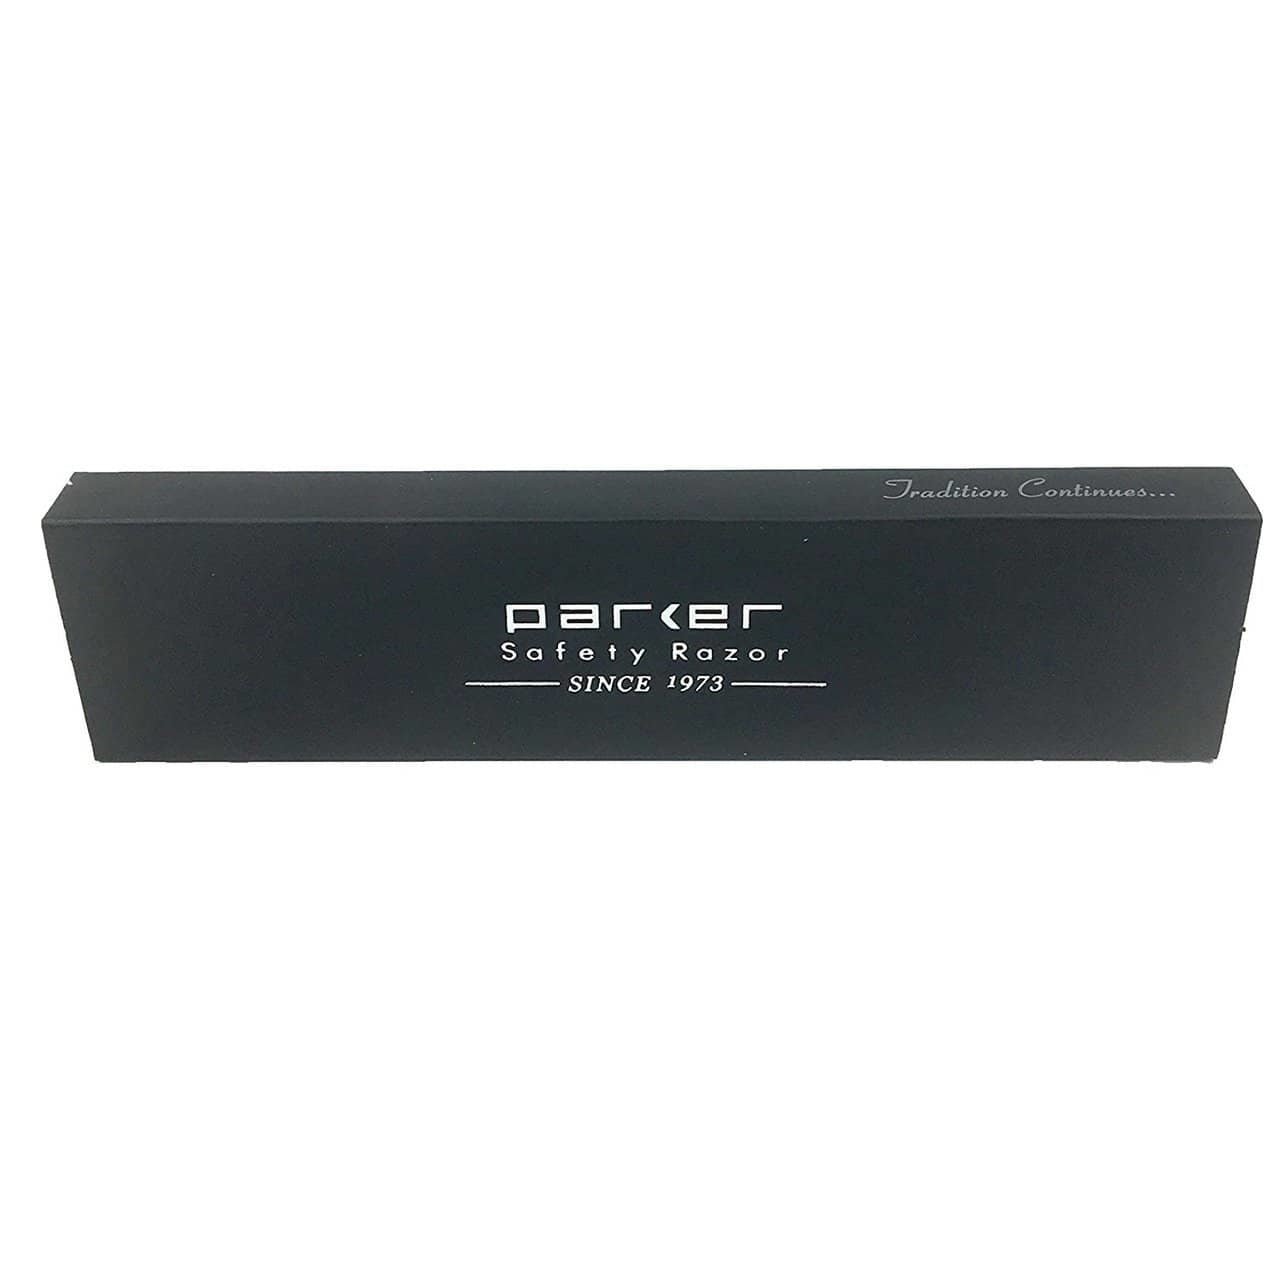 Parker straight razor black 33r - Baard en Co - Shavette - 0657968635654